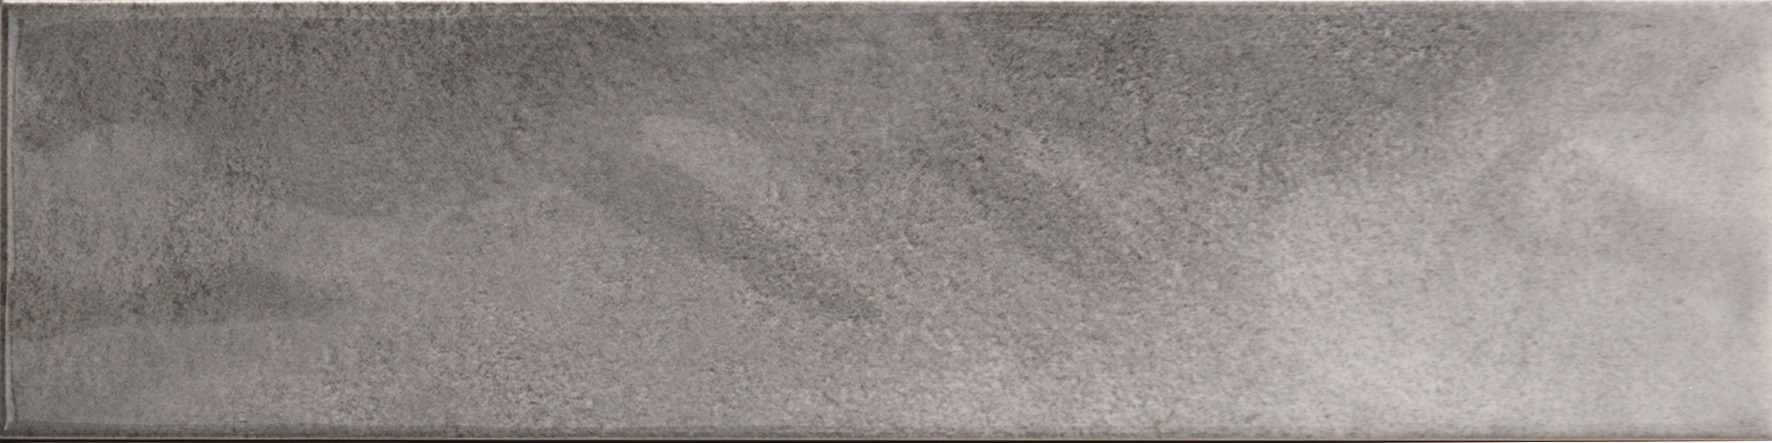 Catalea Gres Timra Metrofliesen Grau glänzend 7,5x30 cm 